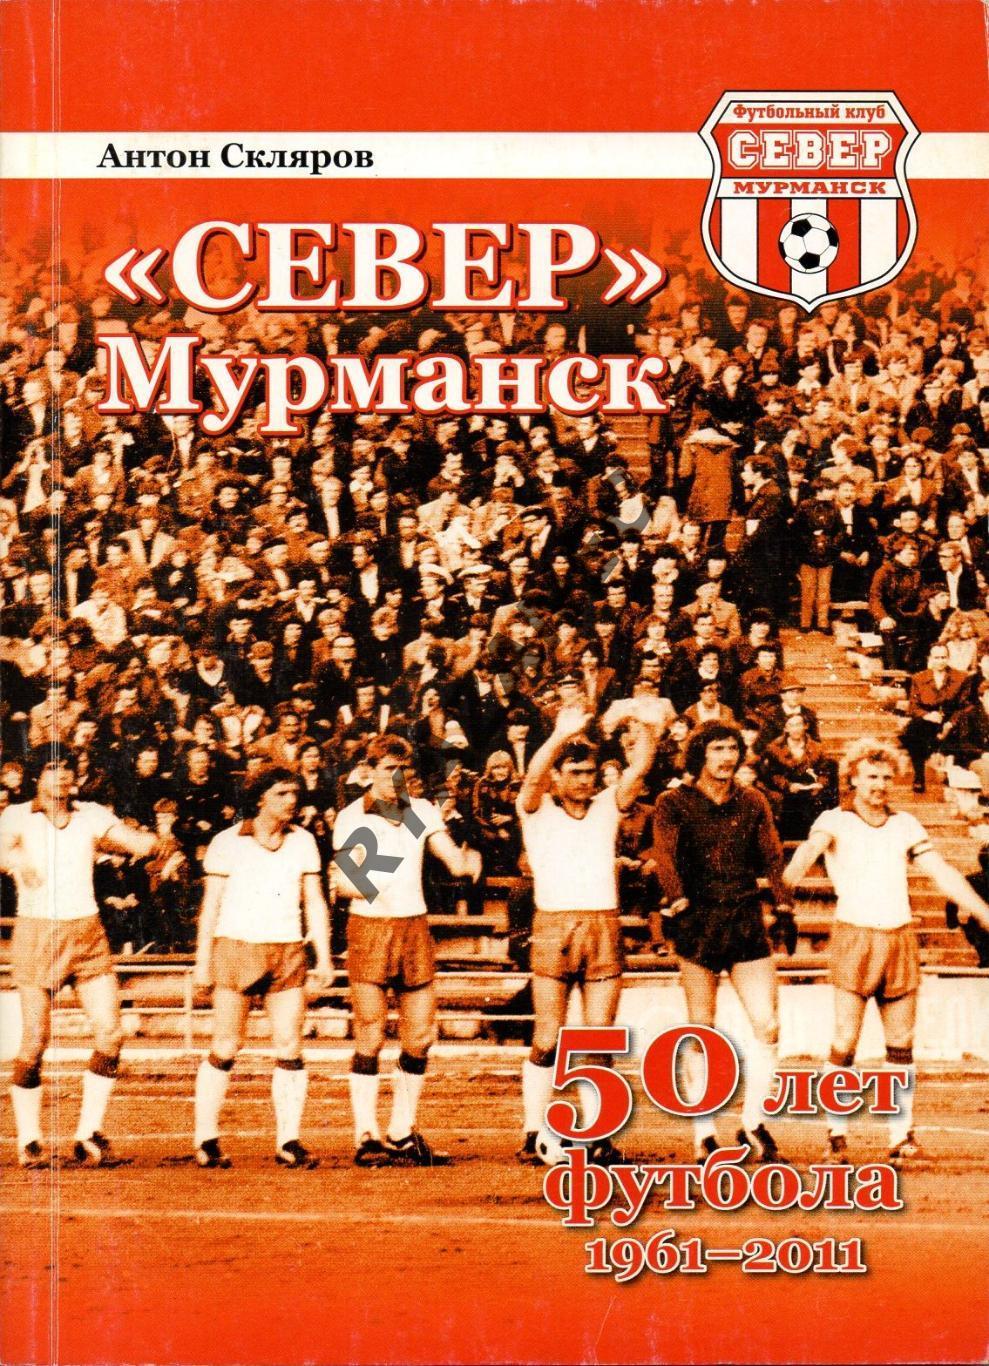 «Север» Мурманск: 50 лет футбола 1961-2011